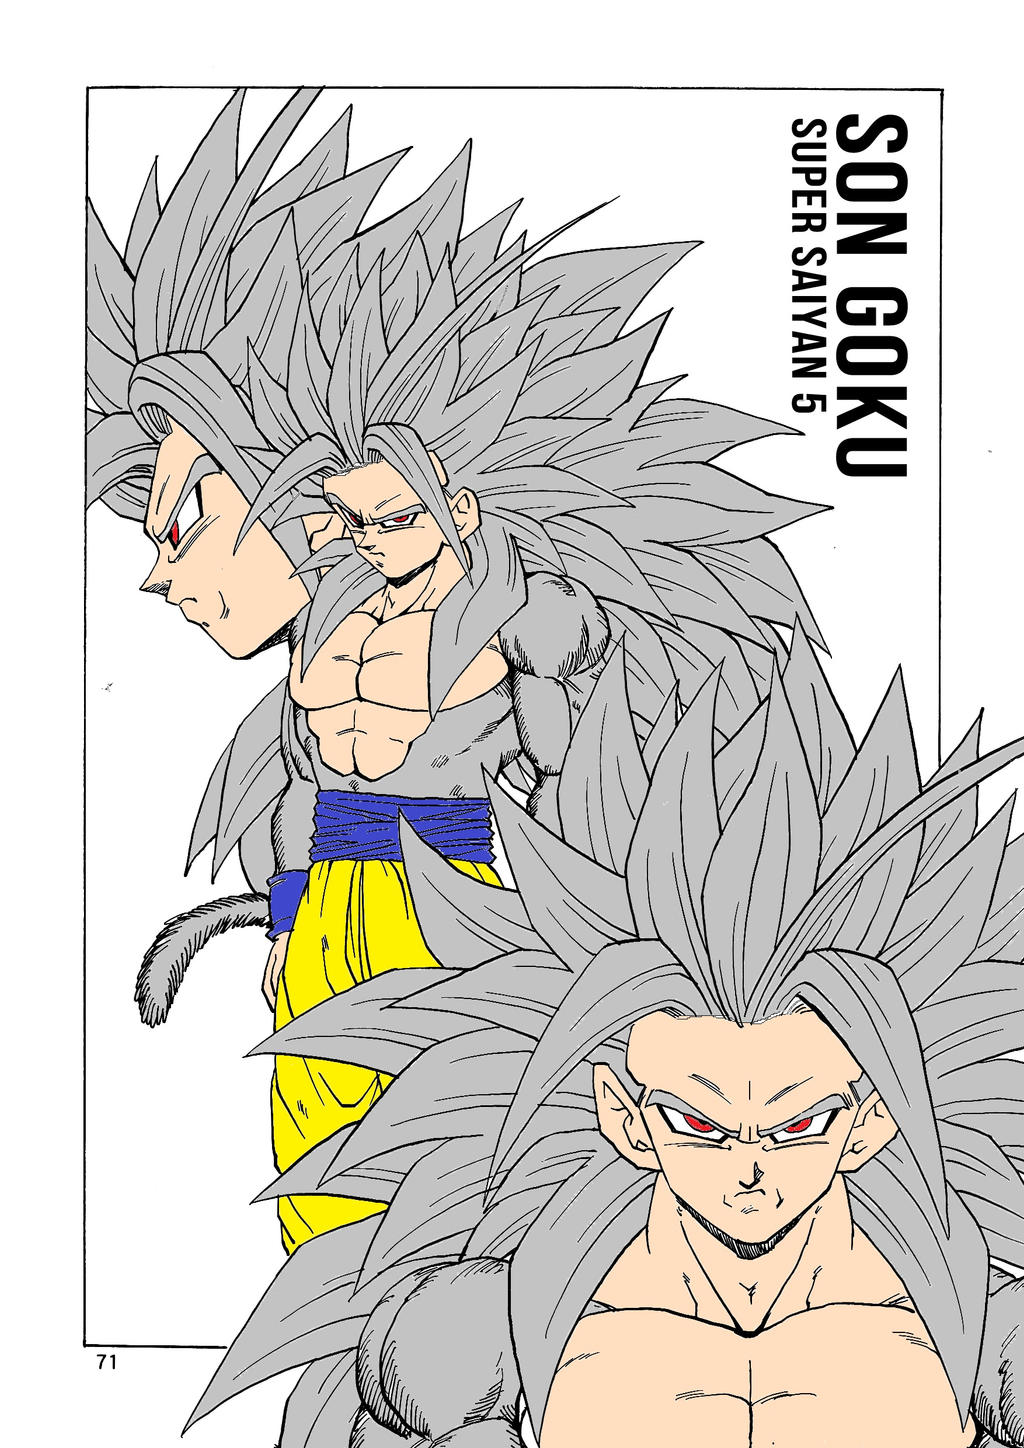 goku ssj5 by 9ary on DeviantArt  Dragon ball super manga, Dragon